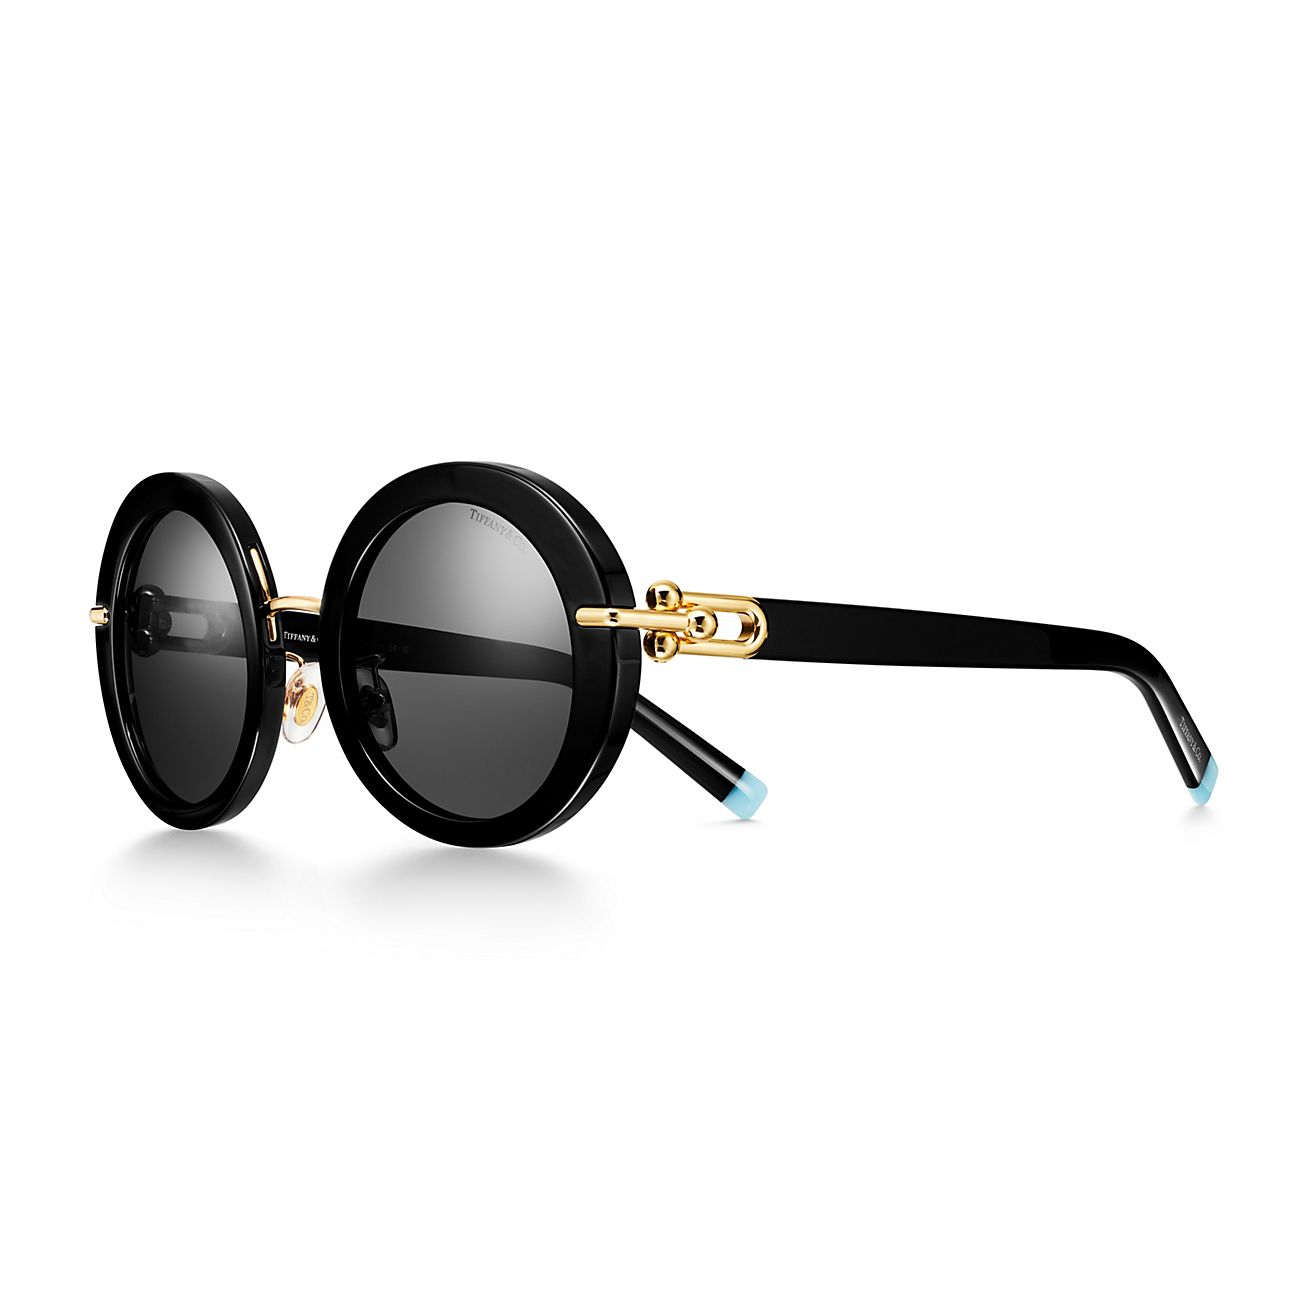 Gold Round Sunglasses - Black